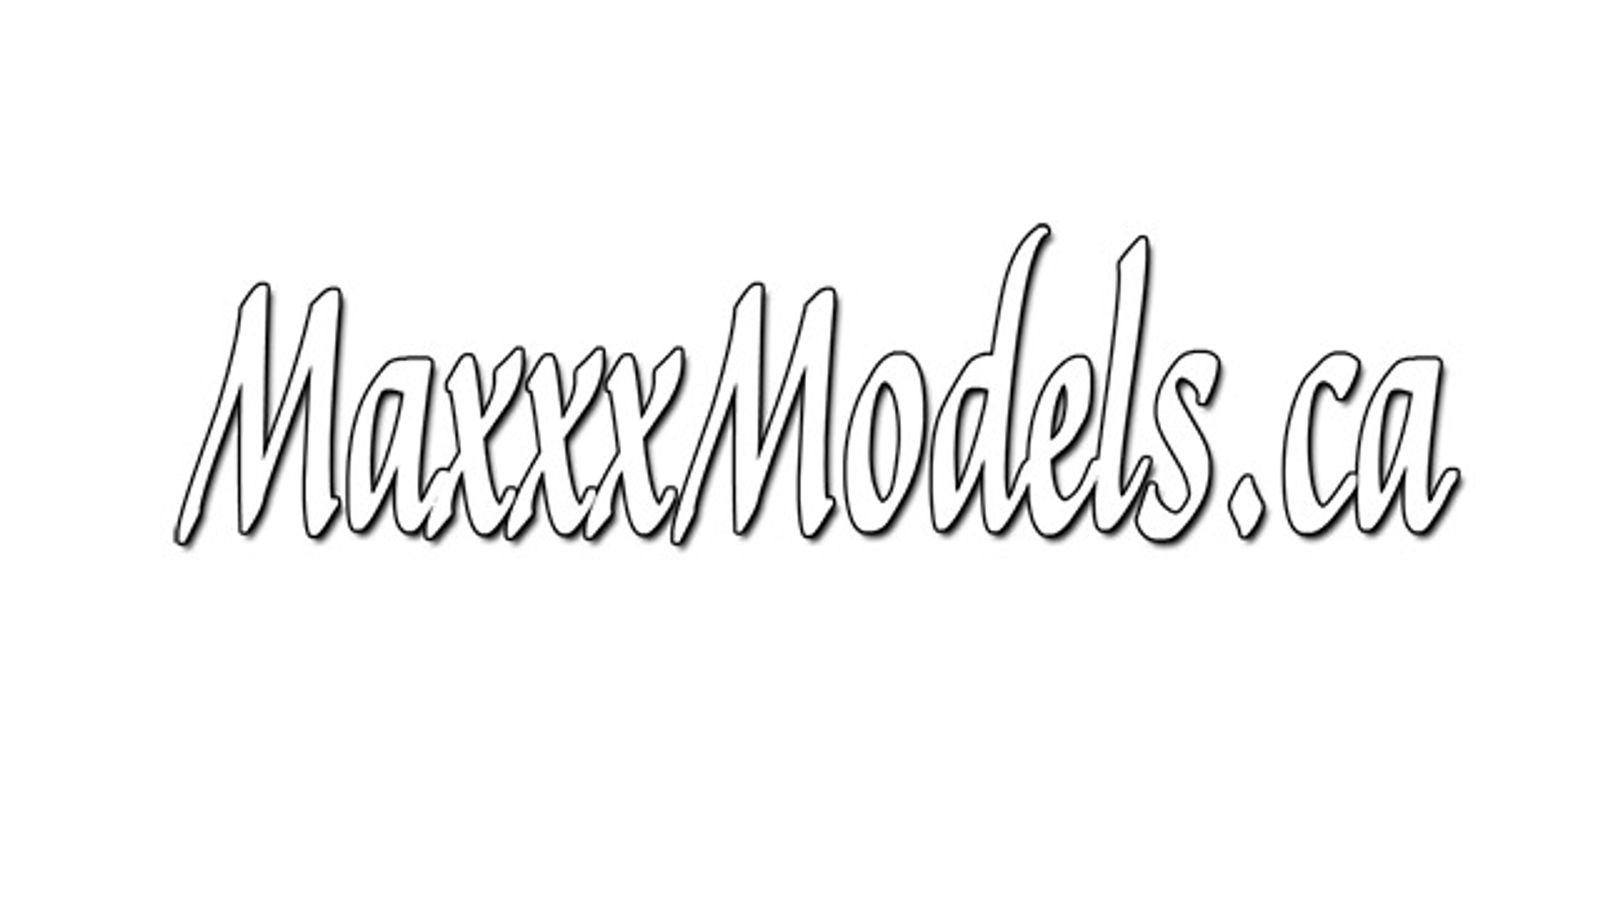 Maxxx Models Canada Announces Talent Availability & Services